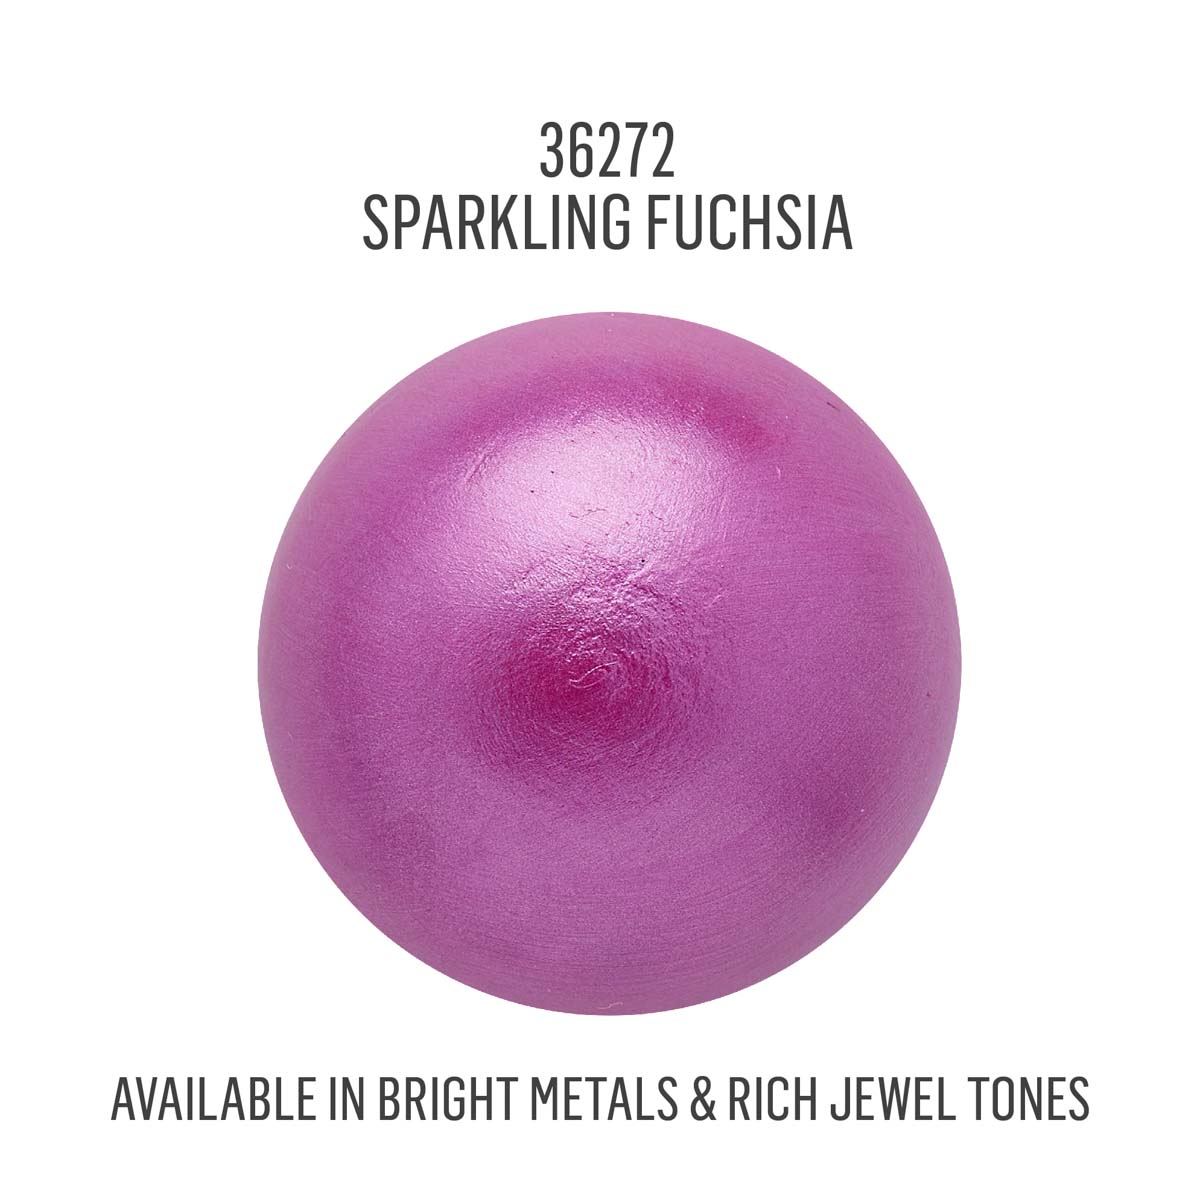 FolkArt ® Metallics - Sparkling Fuchsia, 2 oz. - 36272